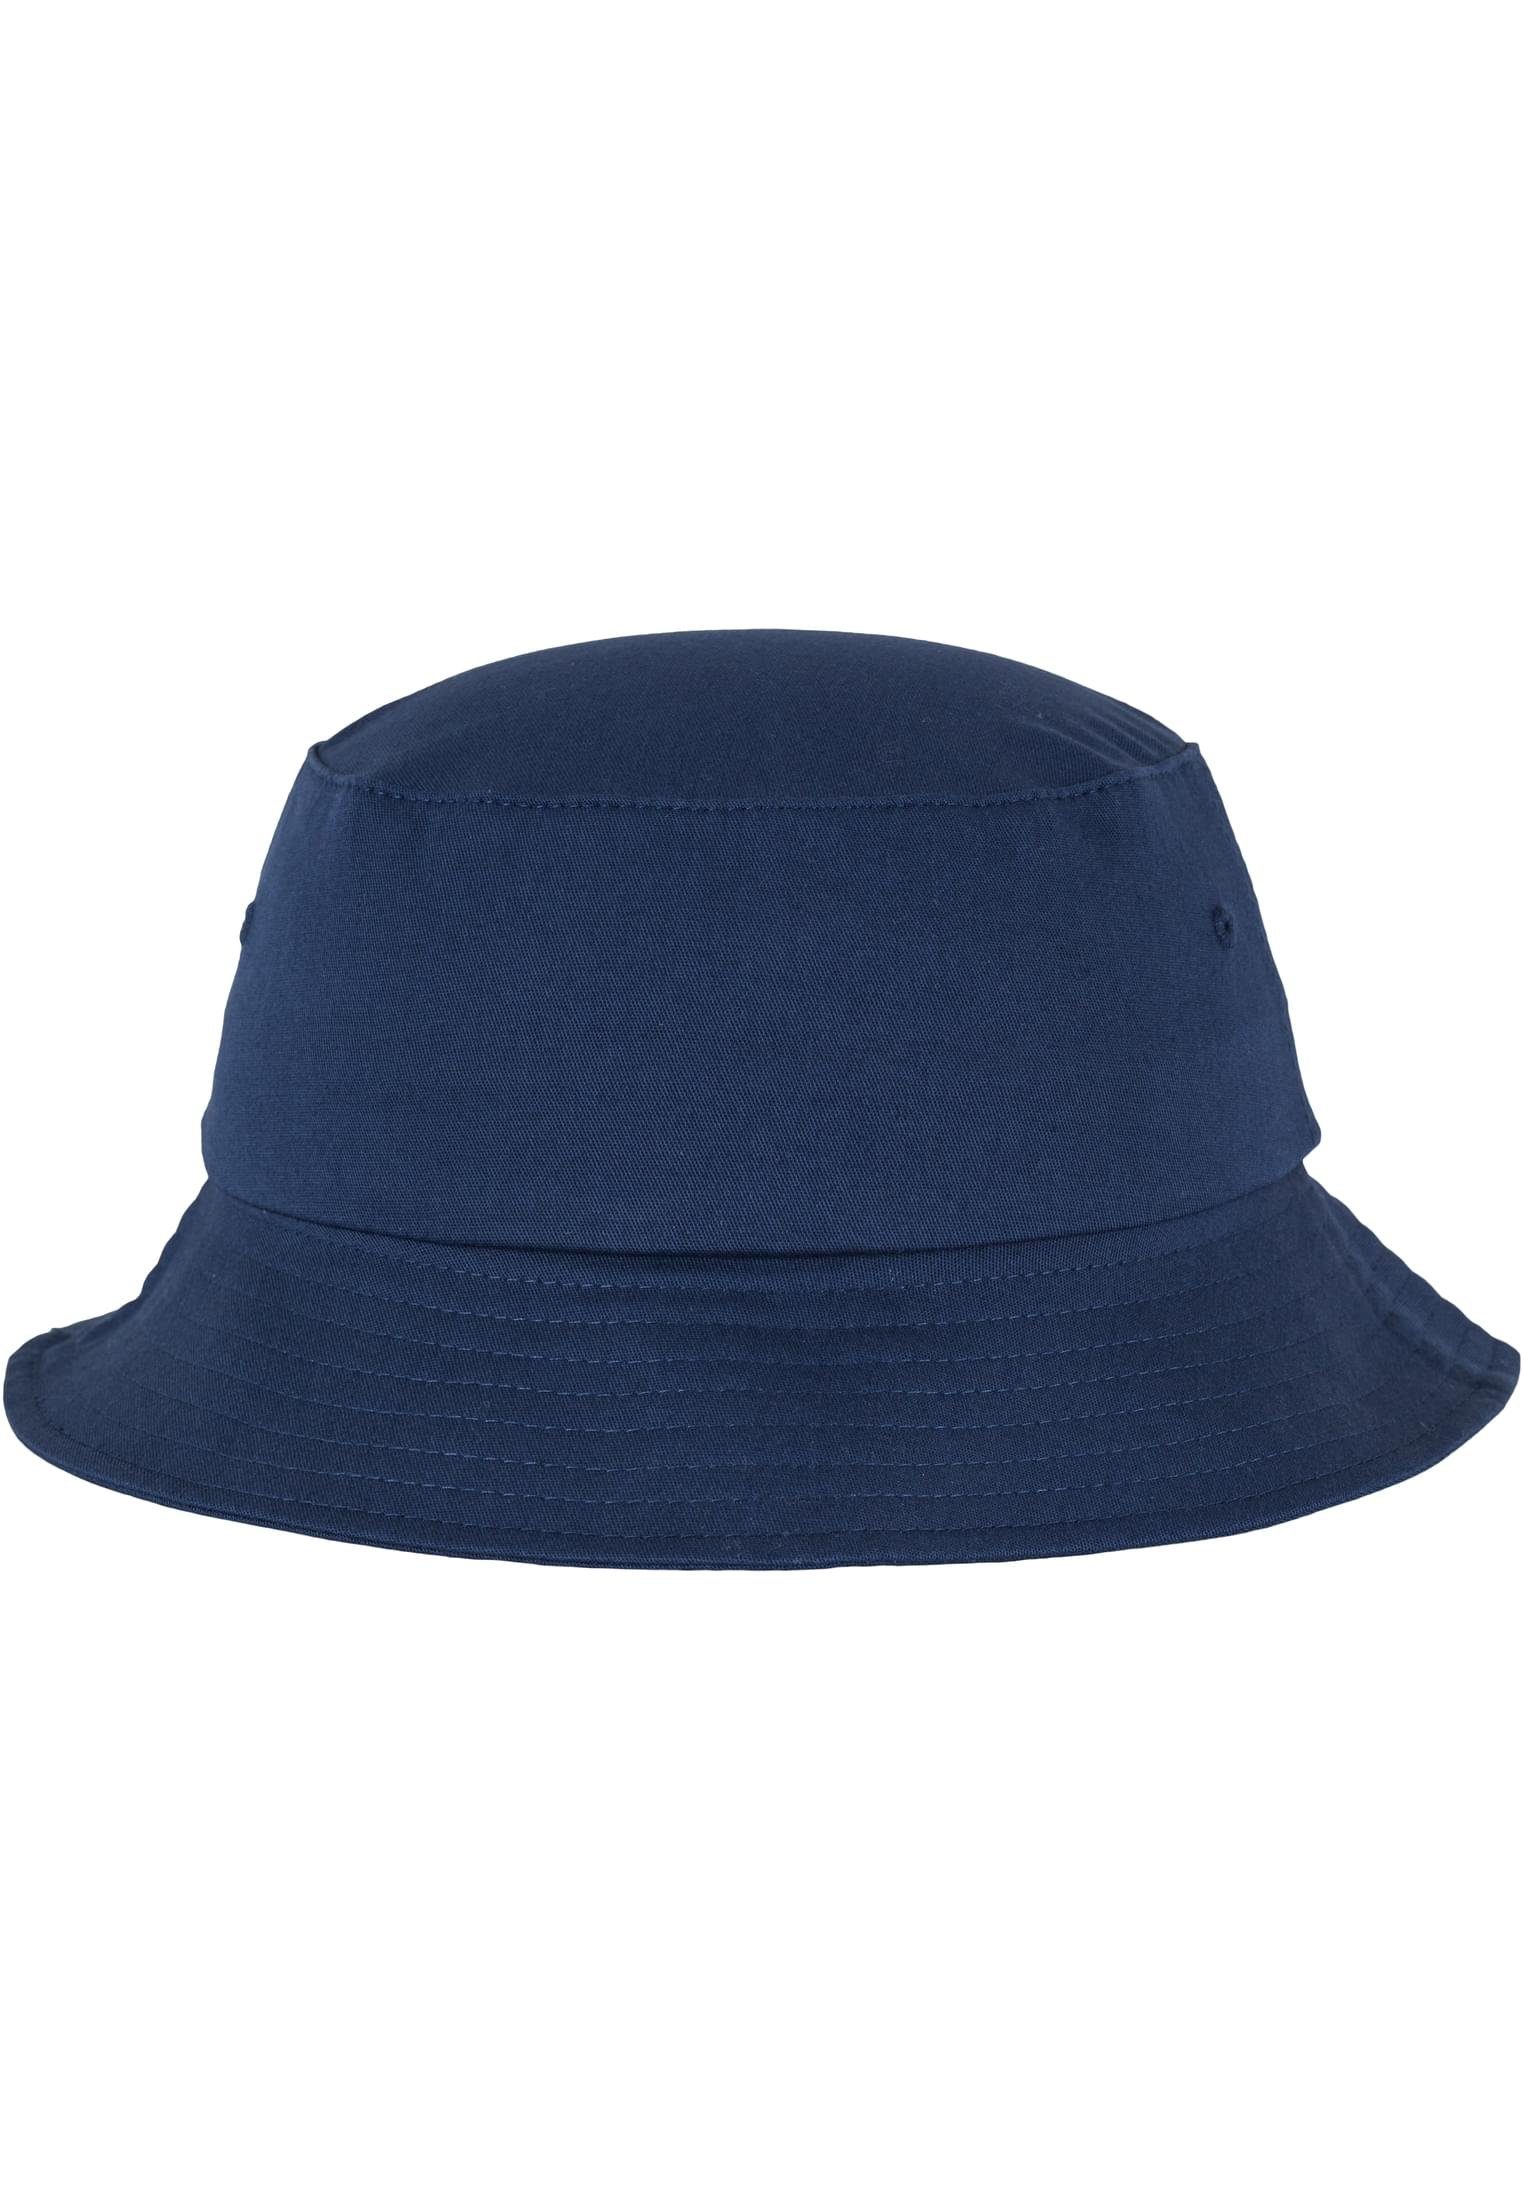 Flexfit Flex Cap Accessoires Flexfit Bucket Cotton navy Twill Hat